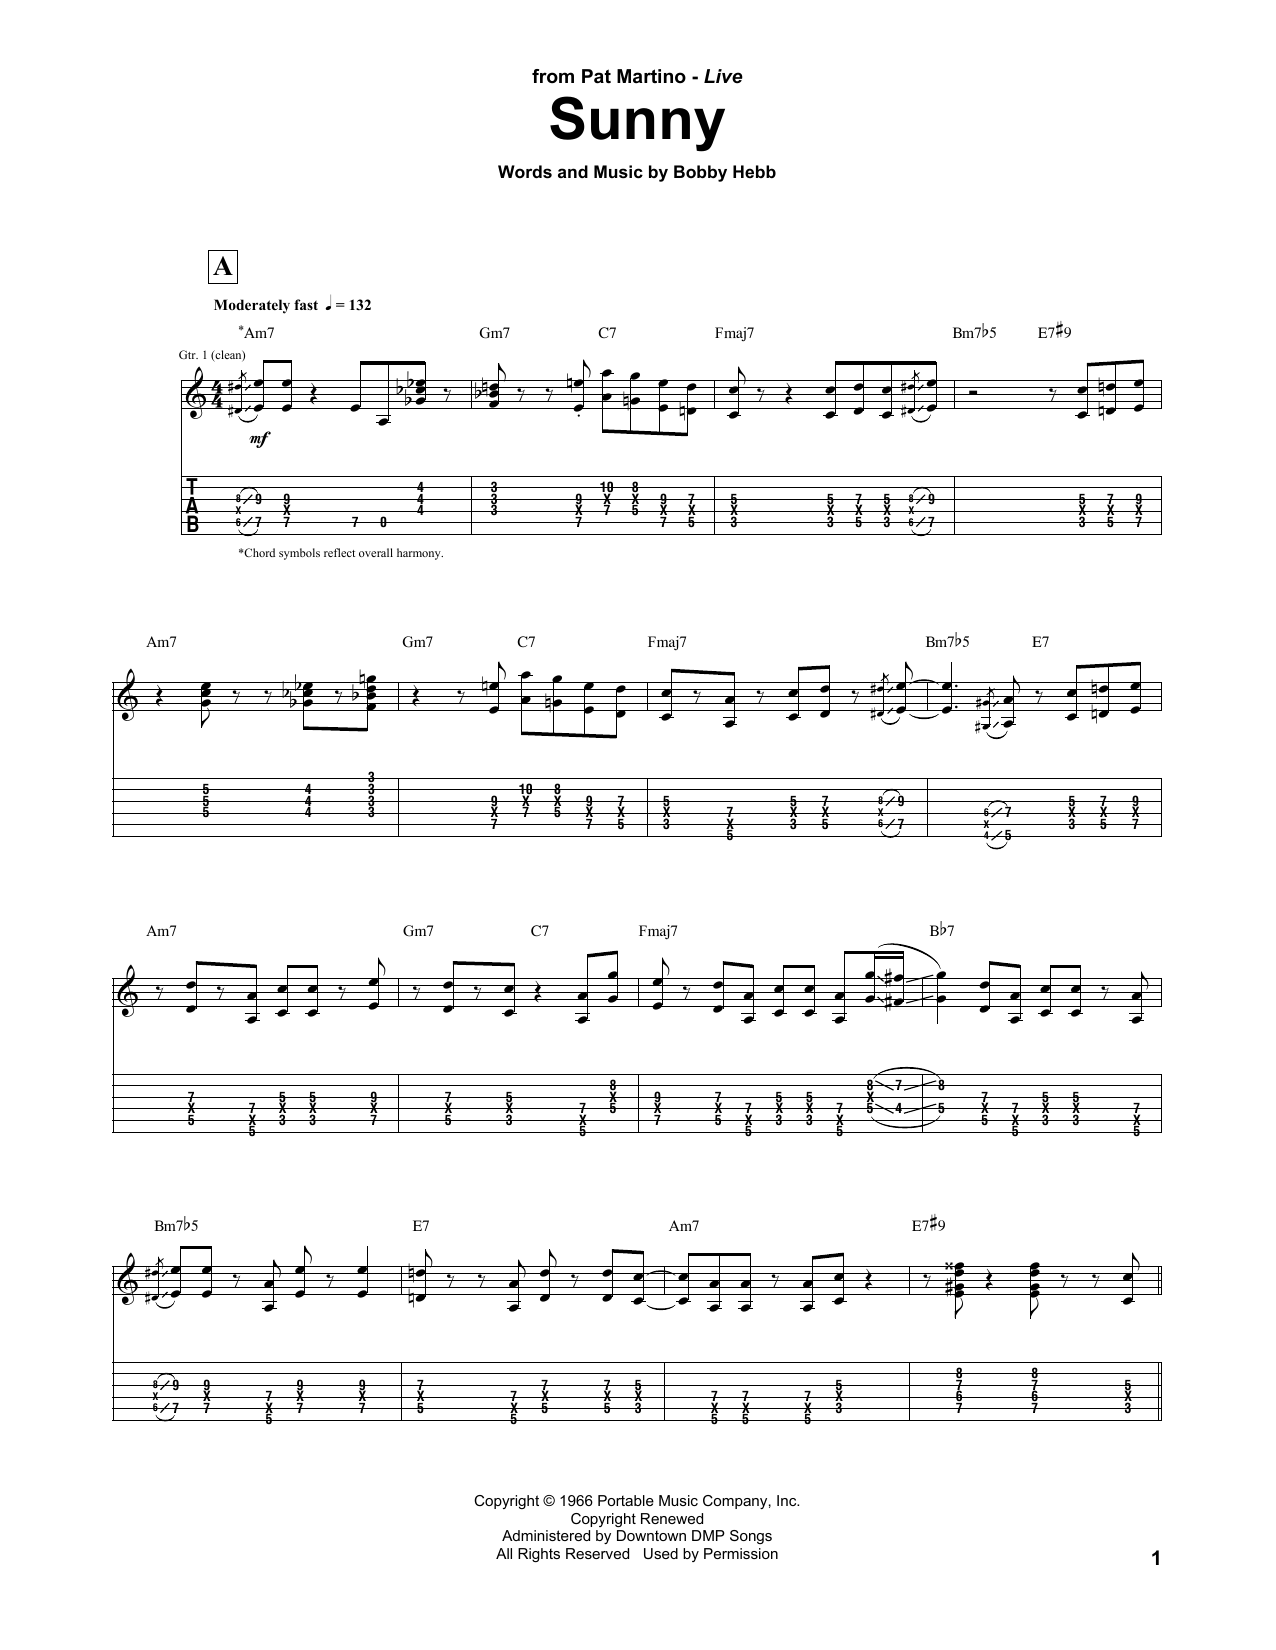 Pat Martino Sunny Sheet Music Notes & Chords for Guitar Tab - Download or Print PDF